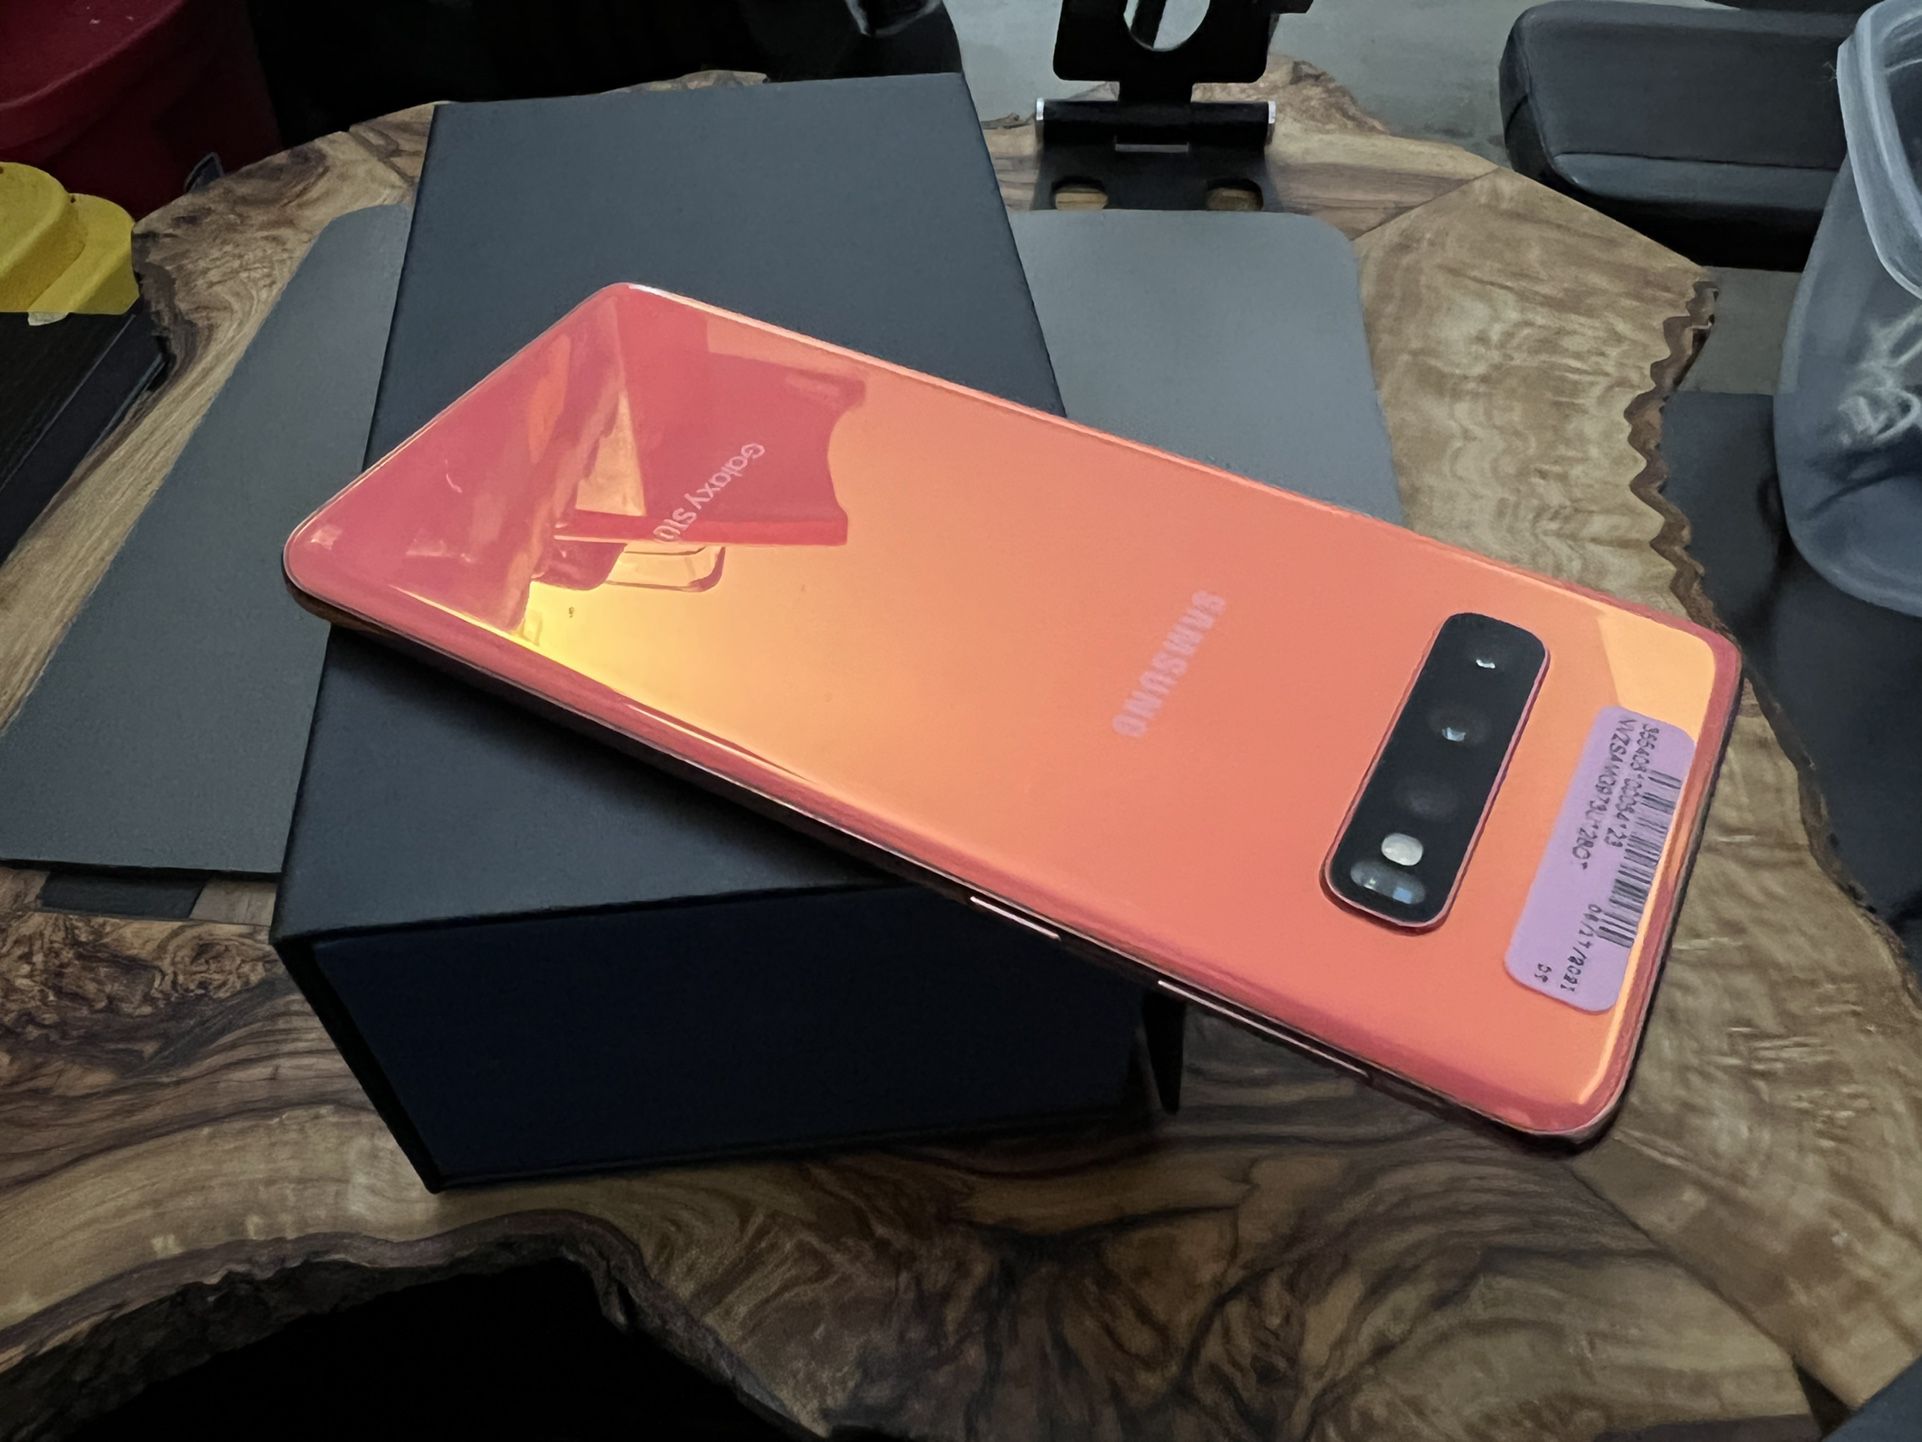 Samsung Galaxy S10 128GB (Unlocked), Flamingo Pink